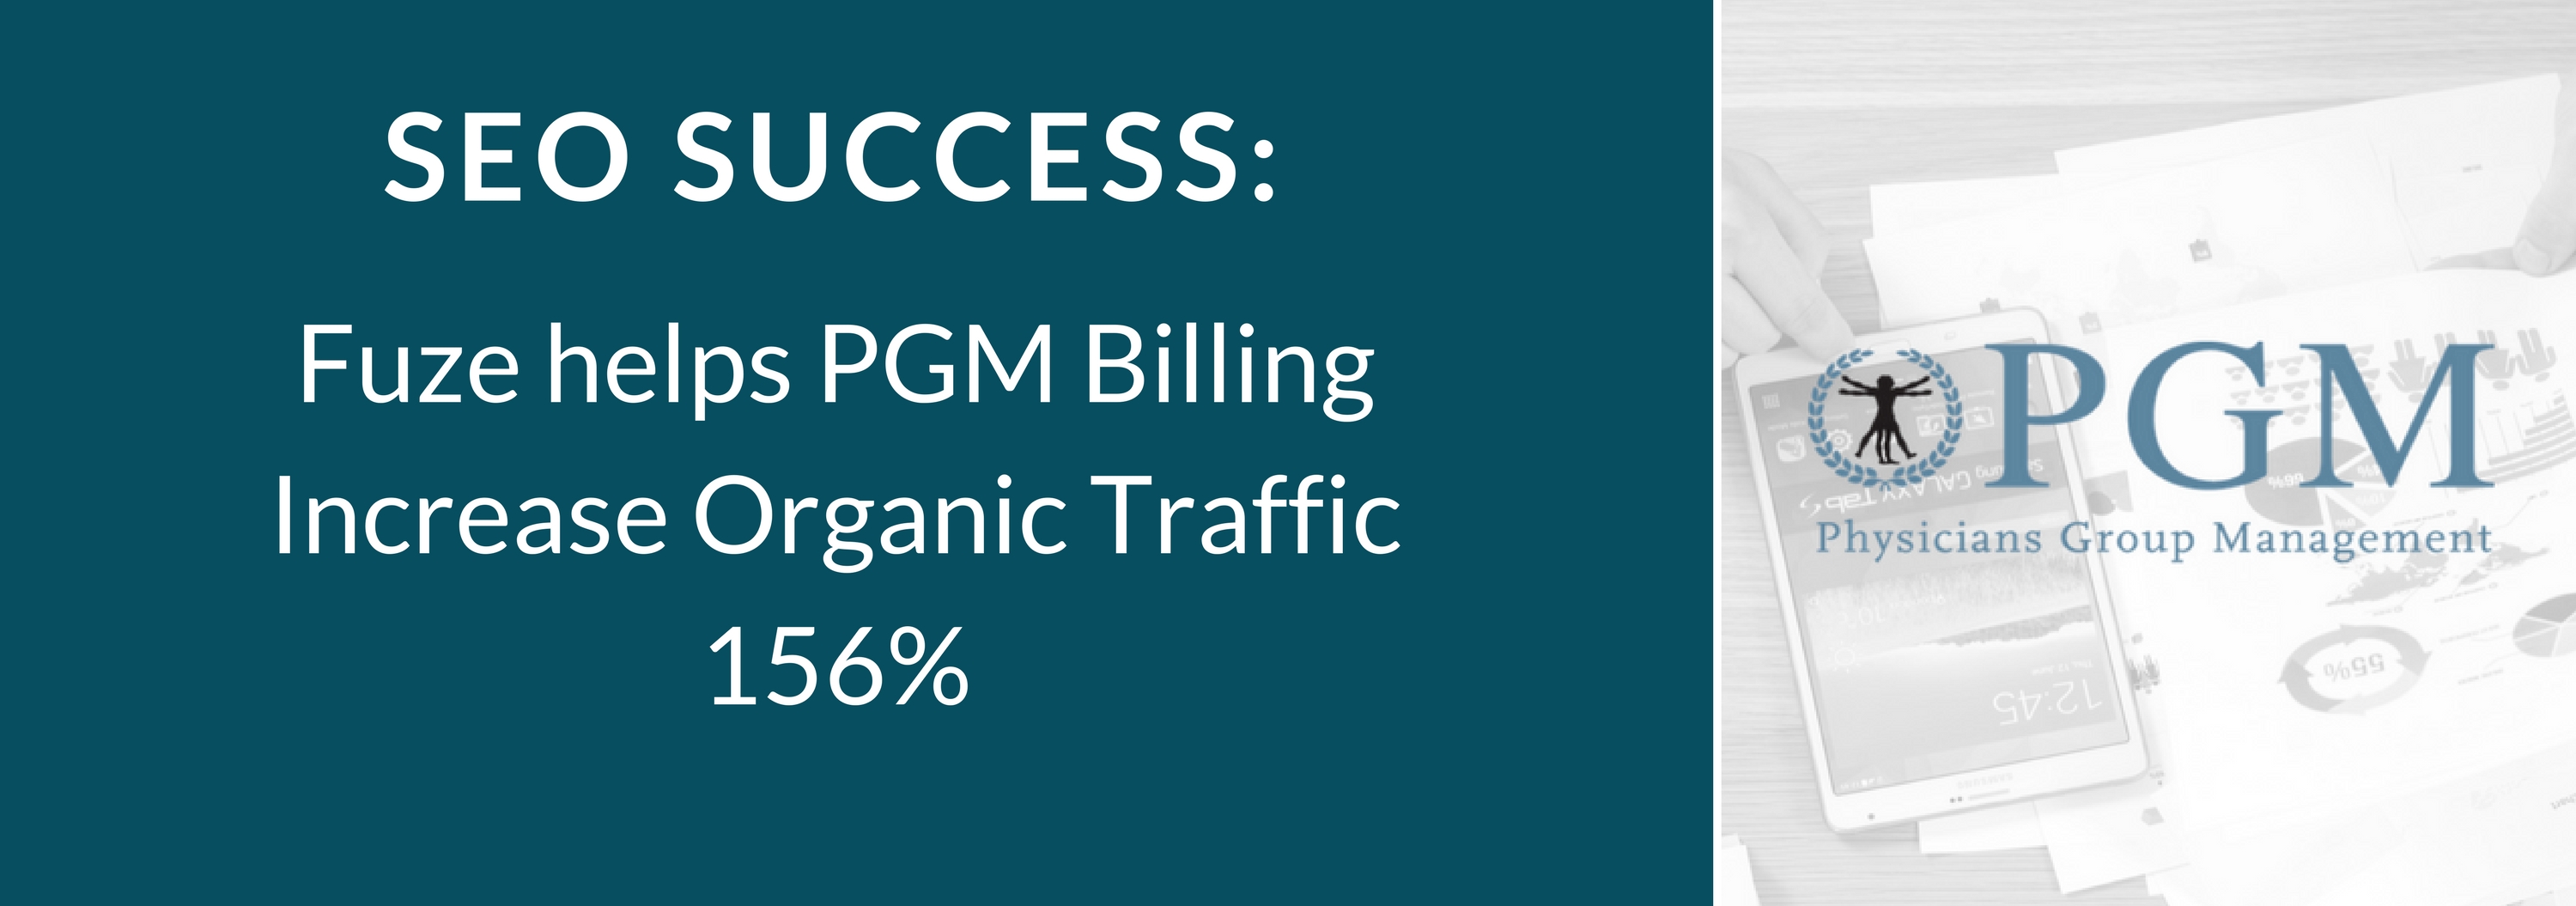 PGM Billing Case Study